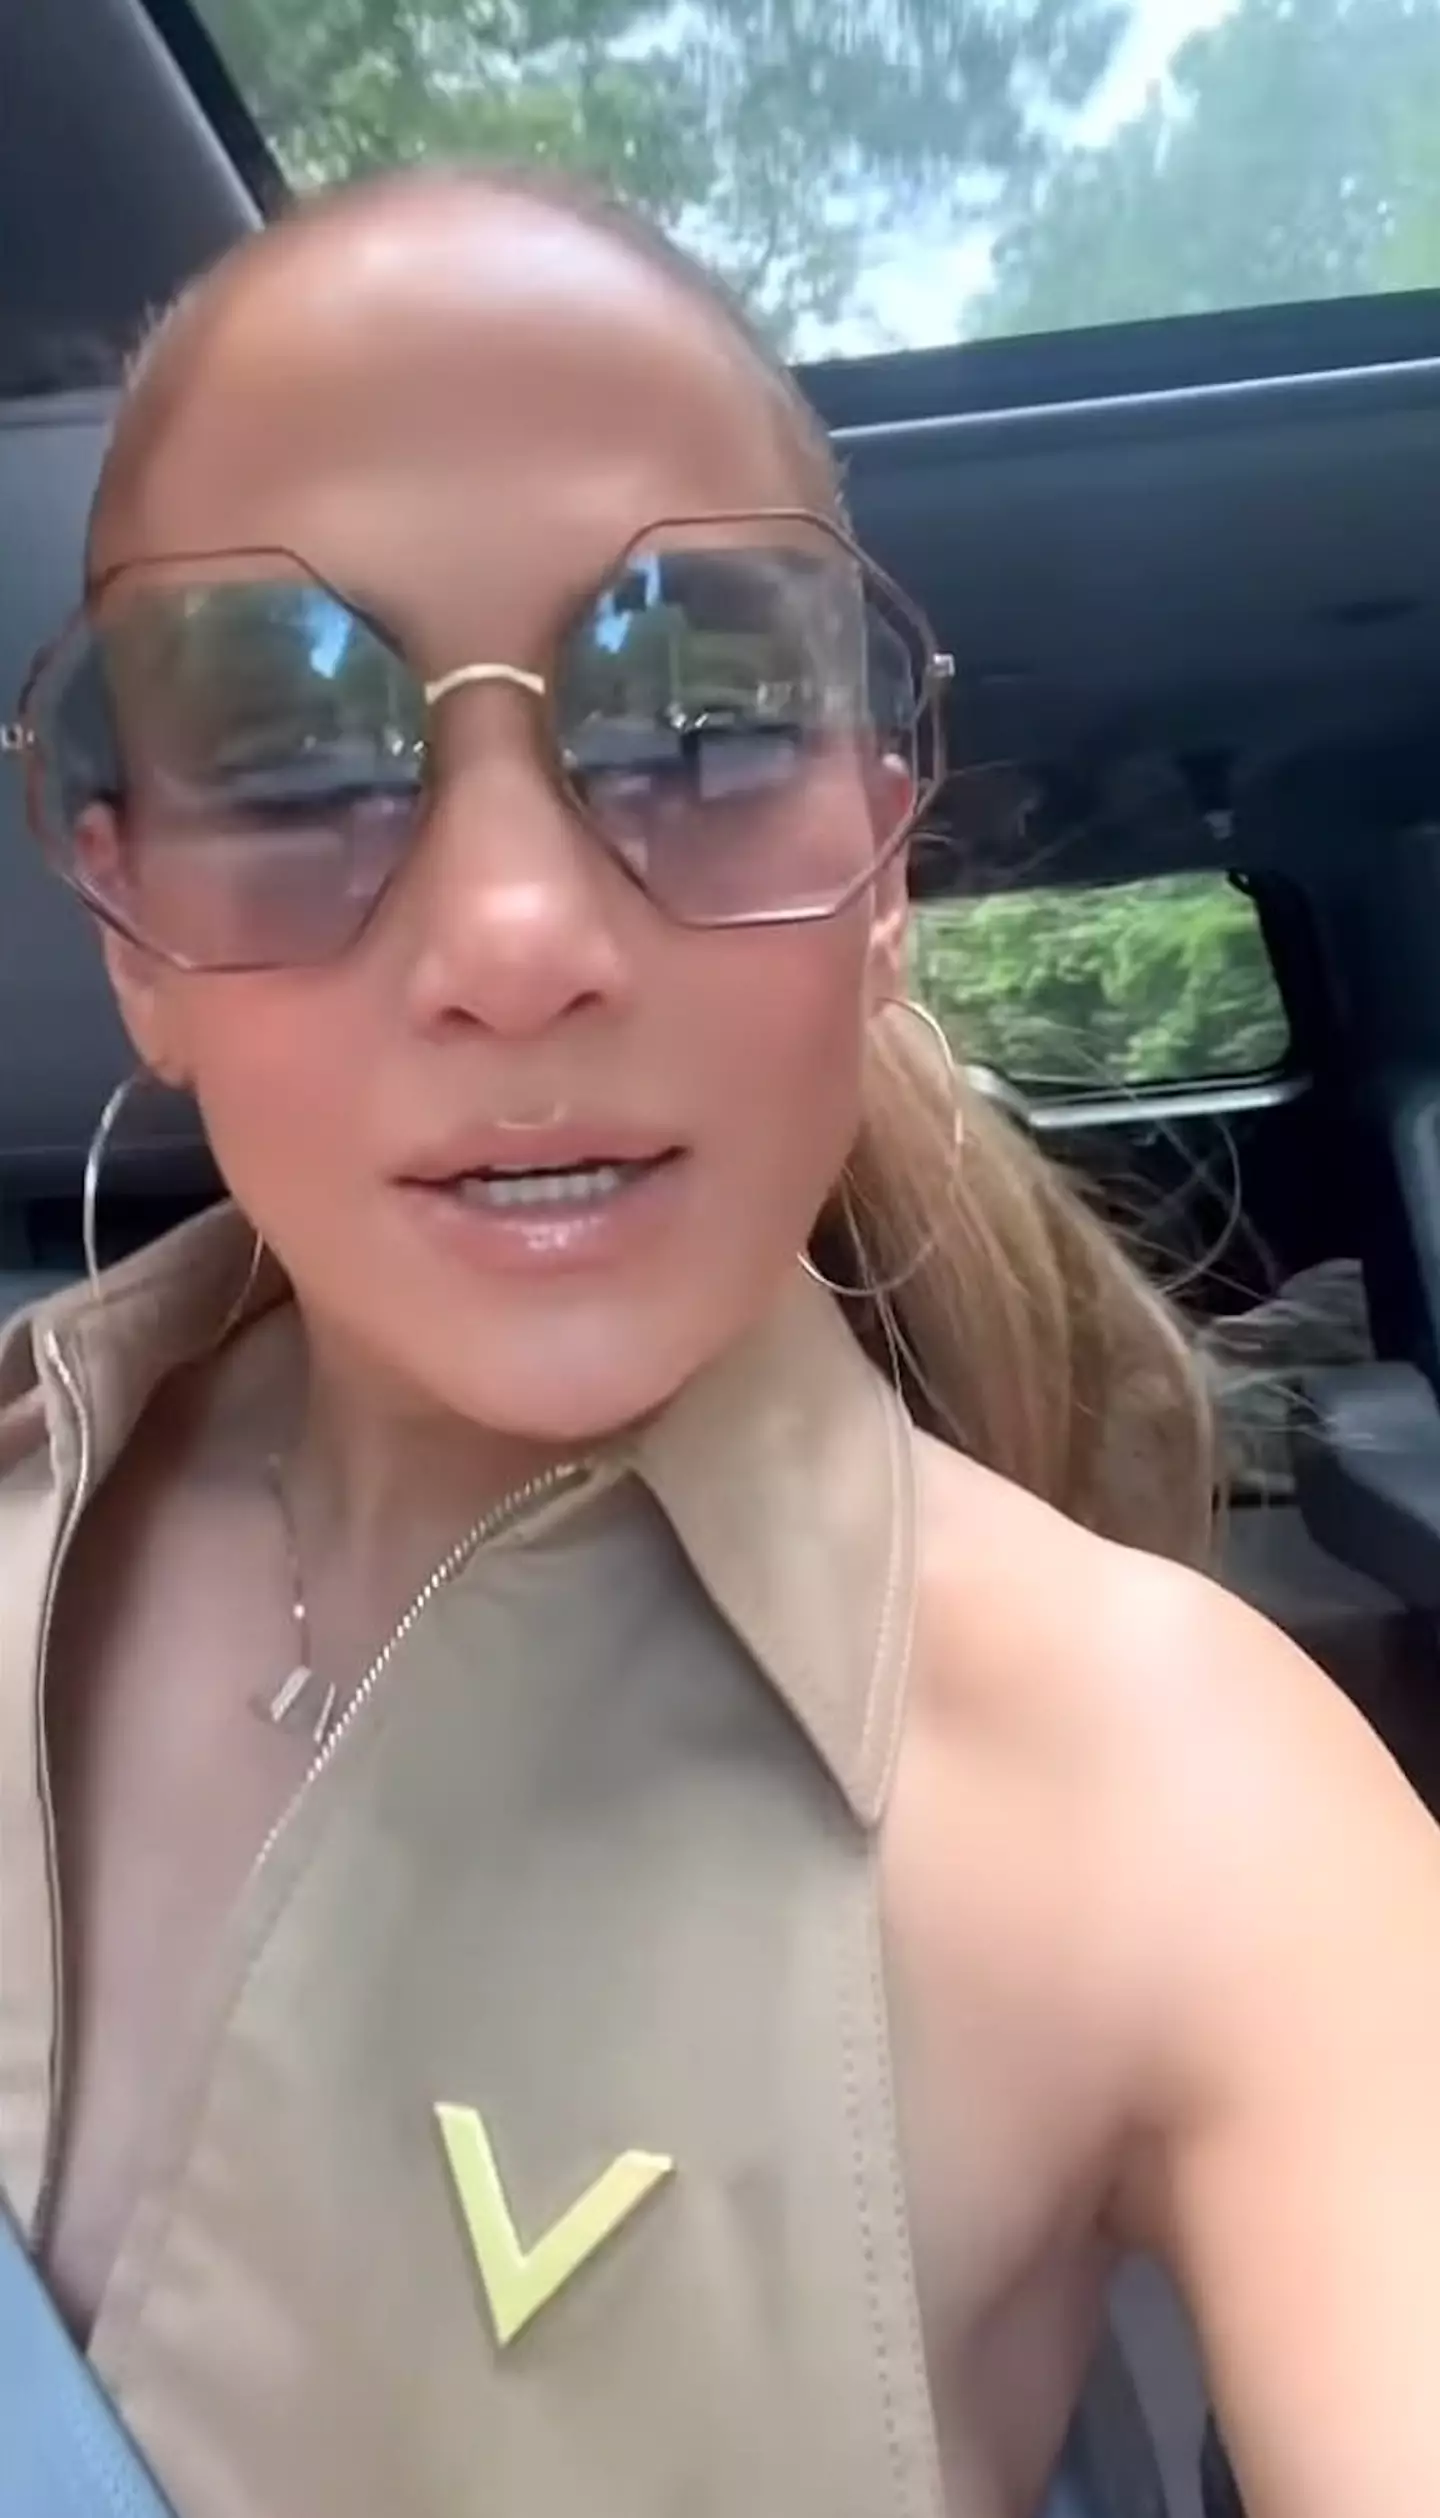 Jennifer Lopez has come under fire for promoting her alcohol brand, despite Ben Affleck's past struggles.